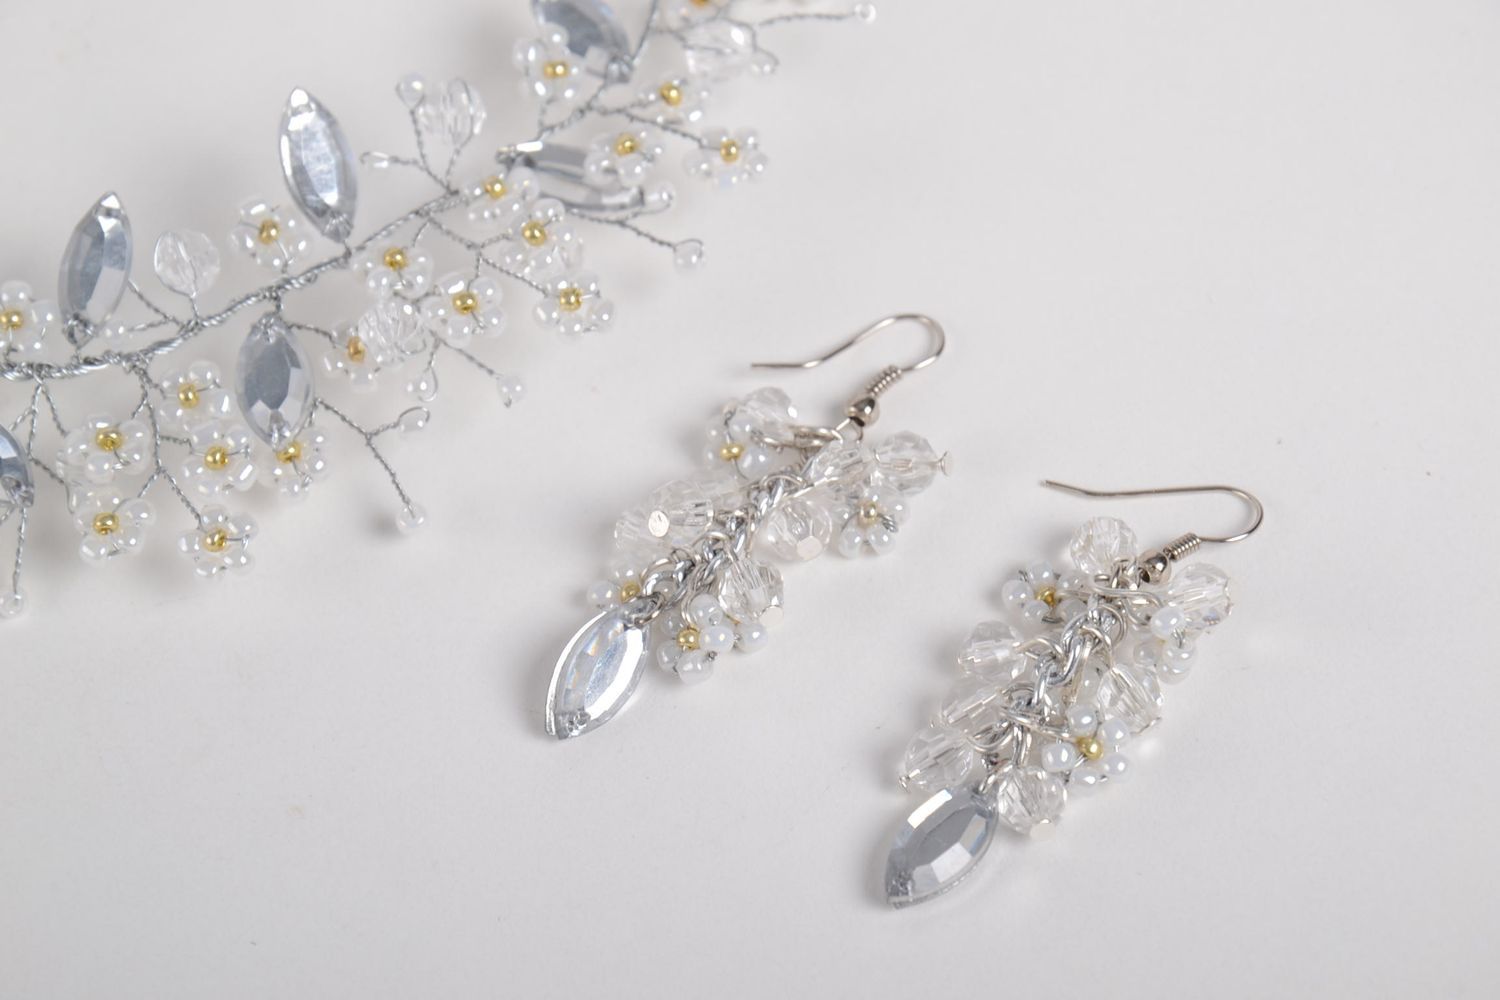 Handmade earrings unusual accessory gift ideas set of 2 items designer jewelry photo 4